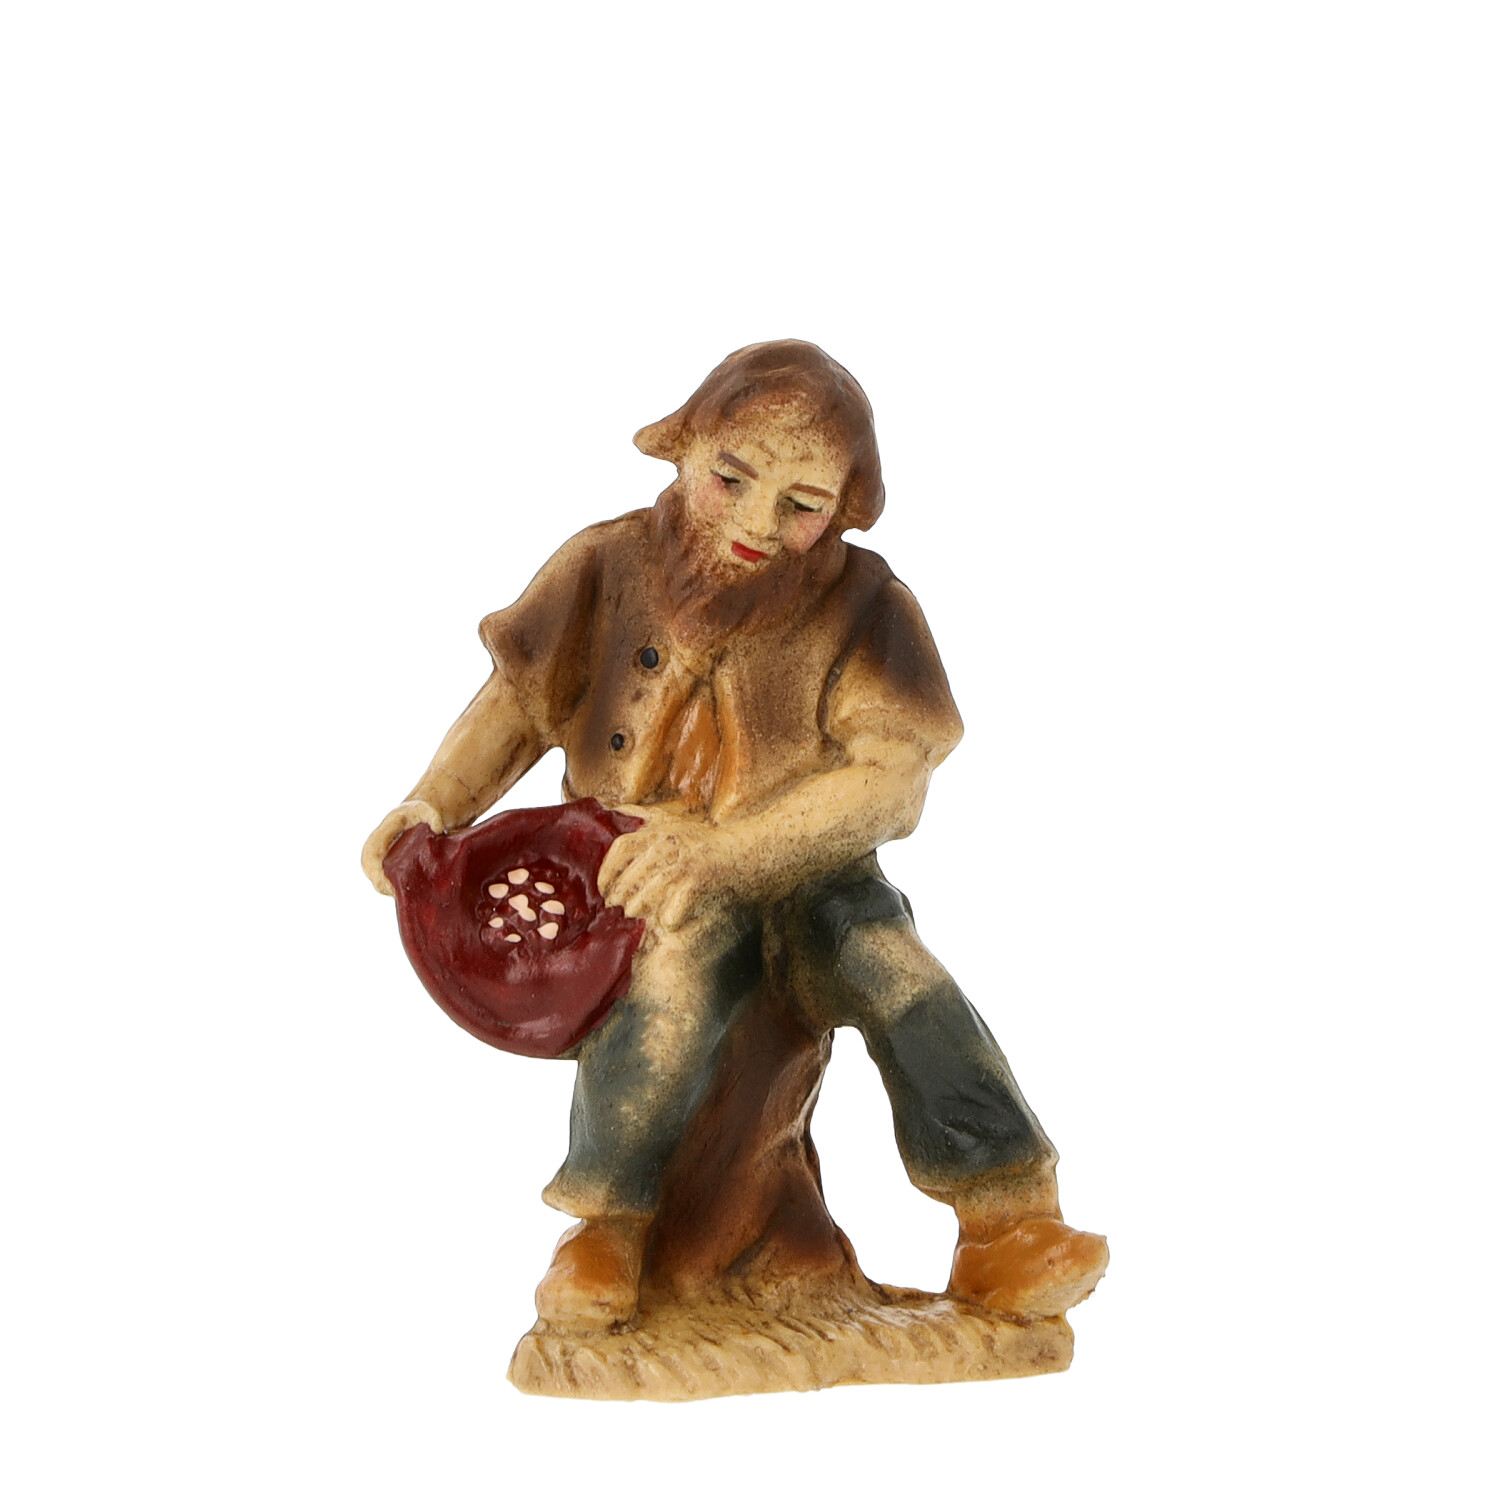 Sitting shepherd - Marolin Plastik - Resin Nativity figure - made in Germany